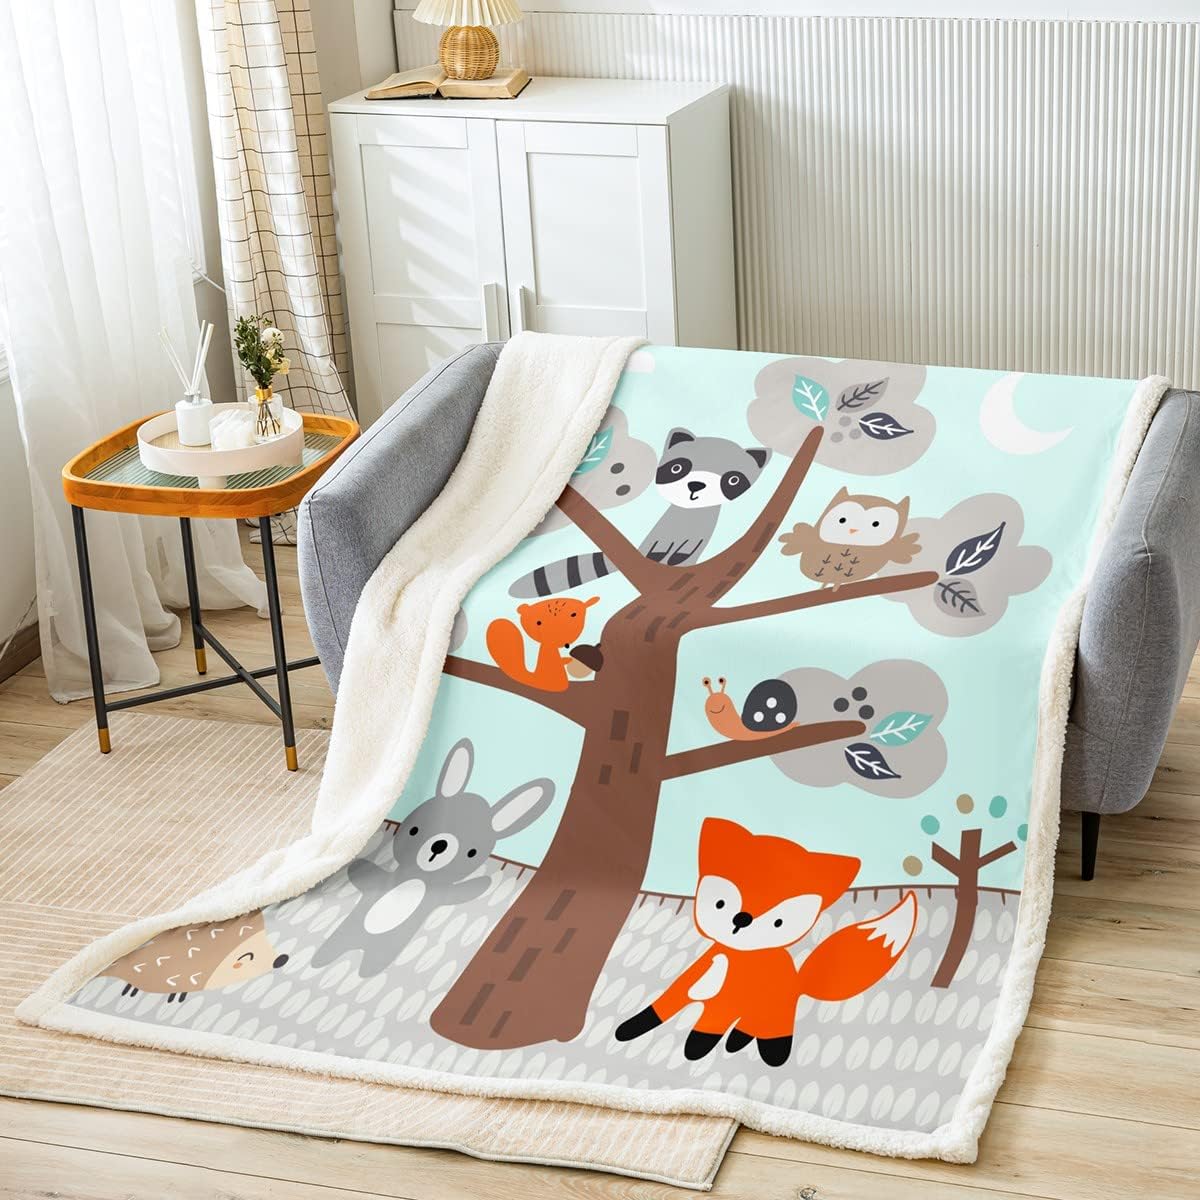 Cute Animal Sherpa Blanket for Toddler